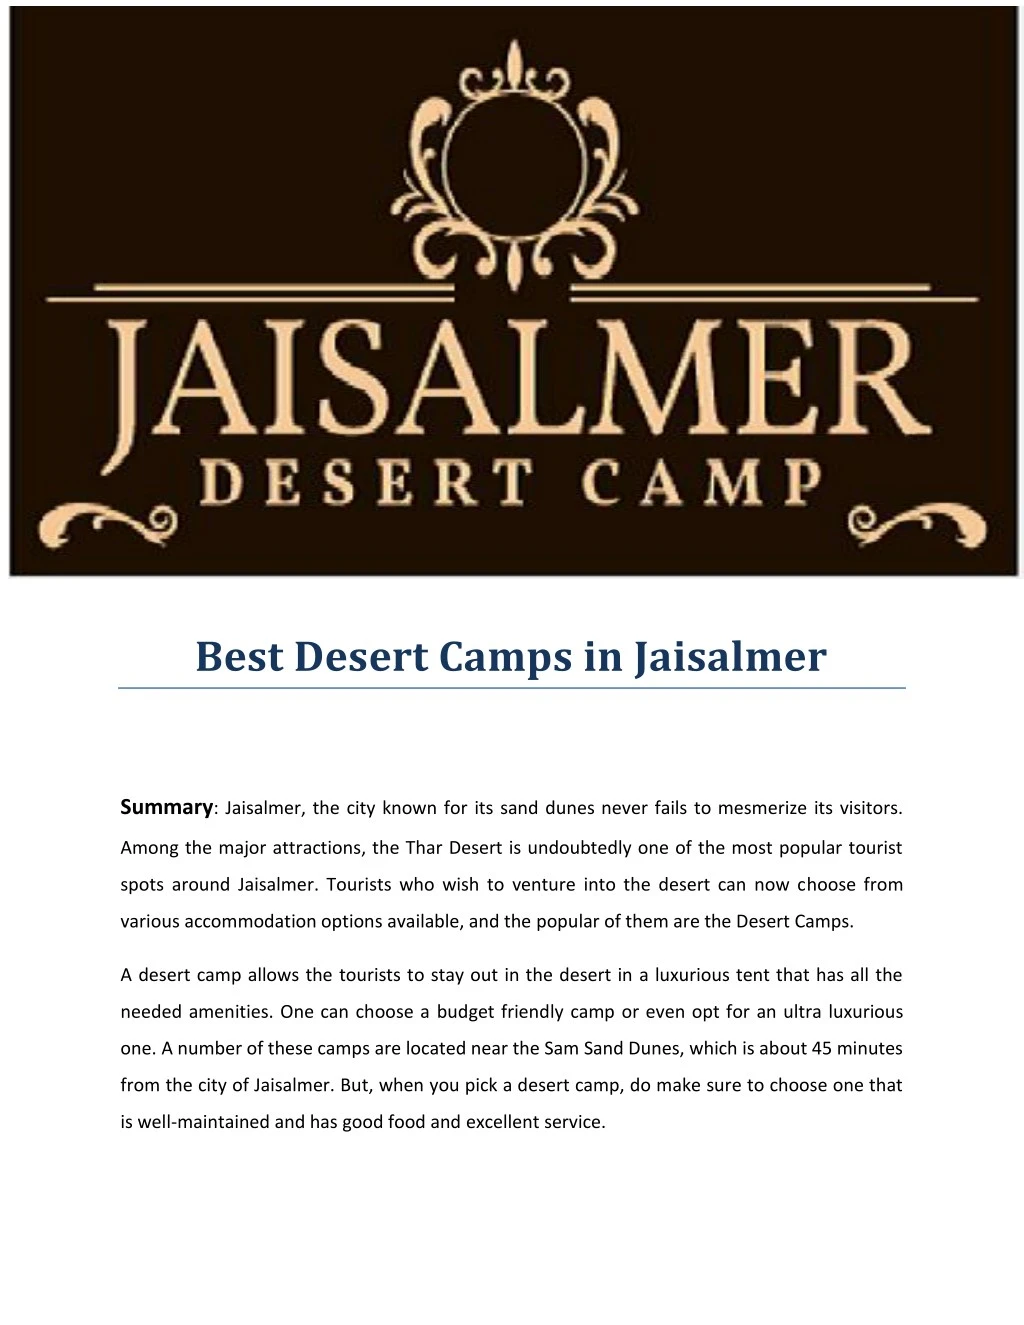 best desert camps in jaisalmer